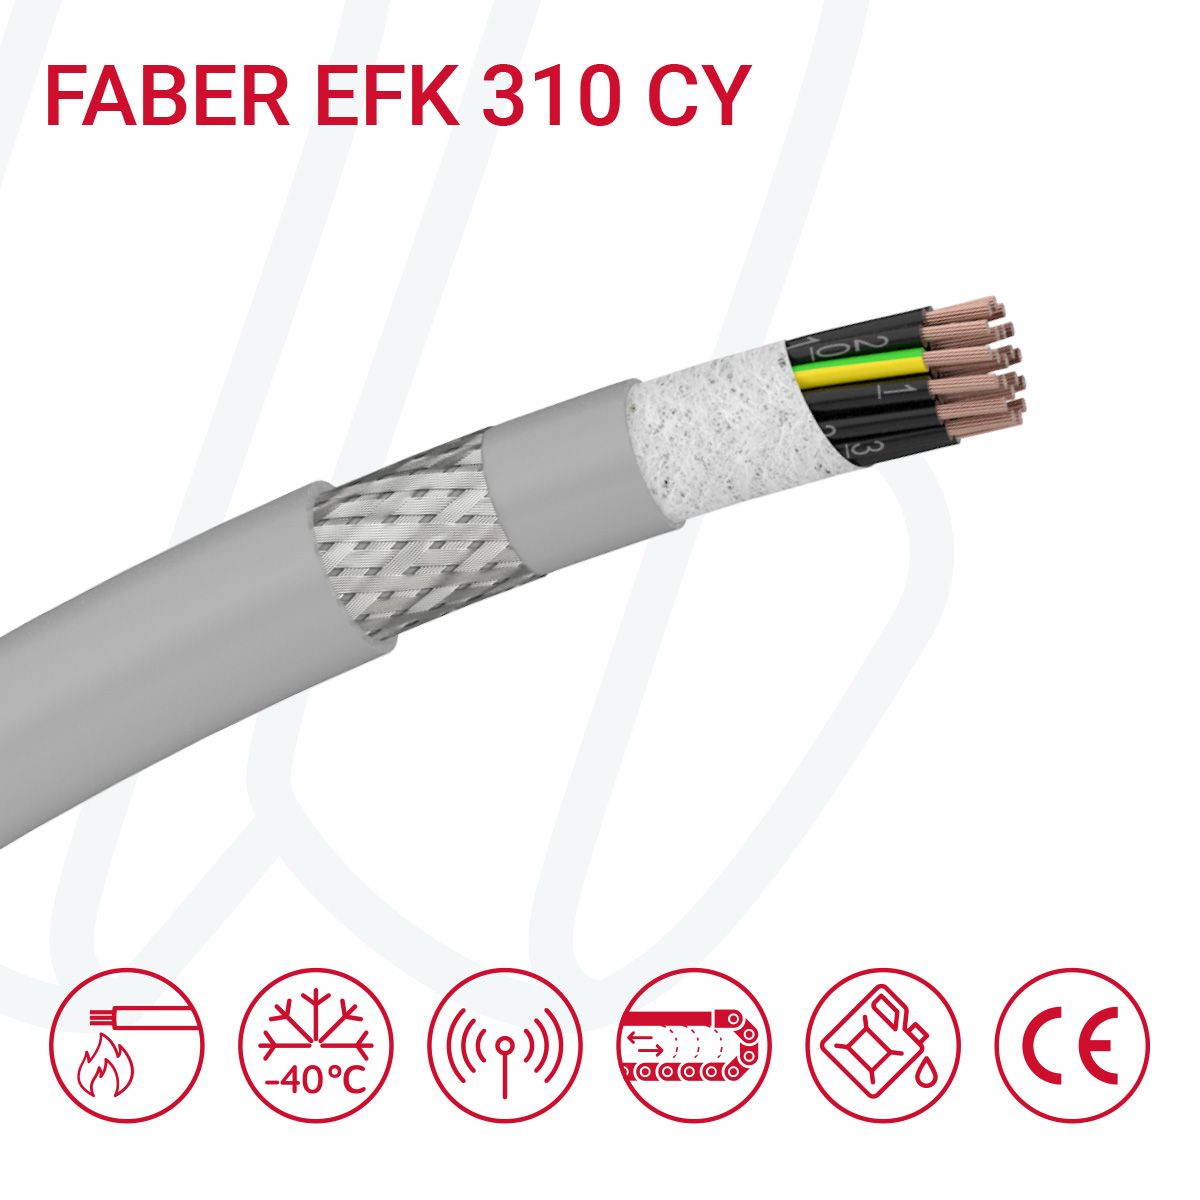 Кабель FABER EFK 310 CY 04G2.5 cUL сірий, 04, 2.5